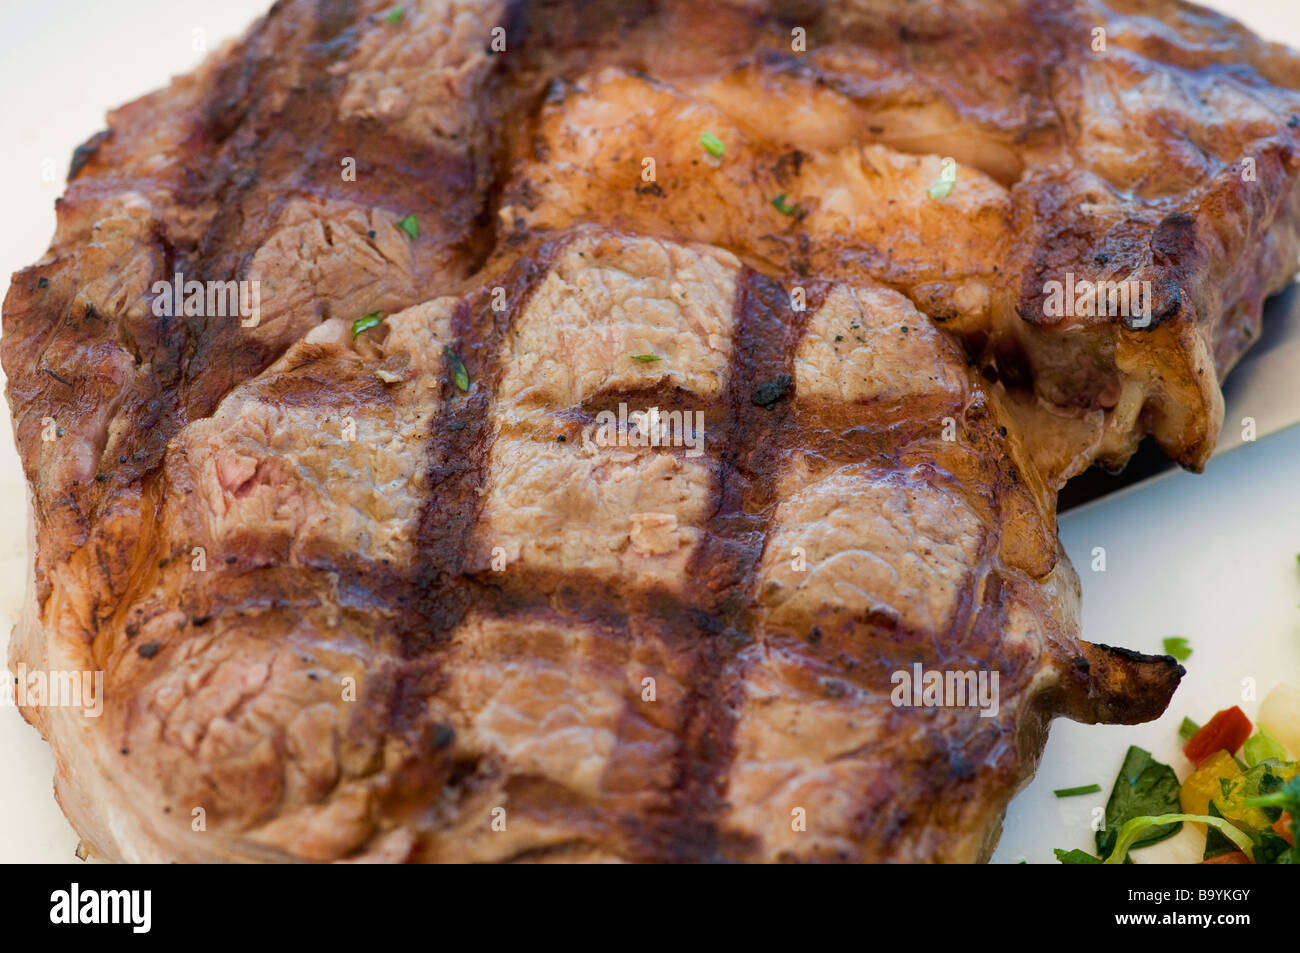 https://c8.alamy.com/comp/B9YKGY/detail-of-a-juicy-prime-rib-entrecote-steak-B9YKGY.jpg